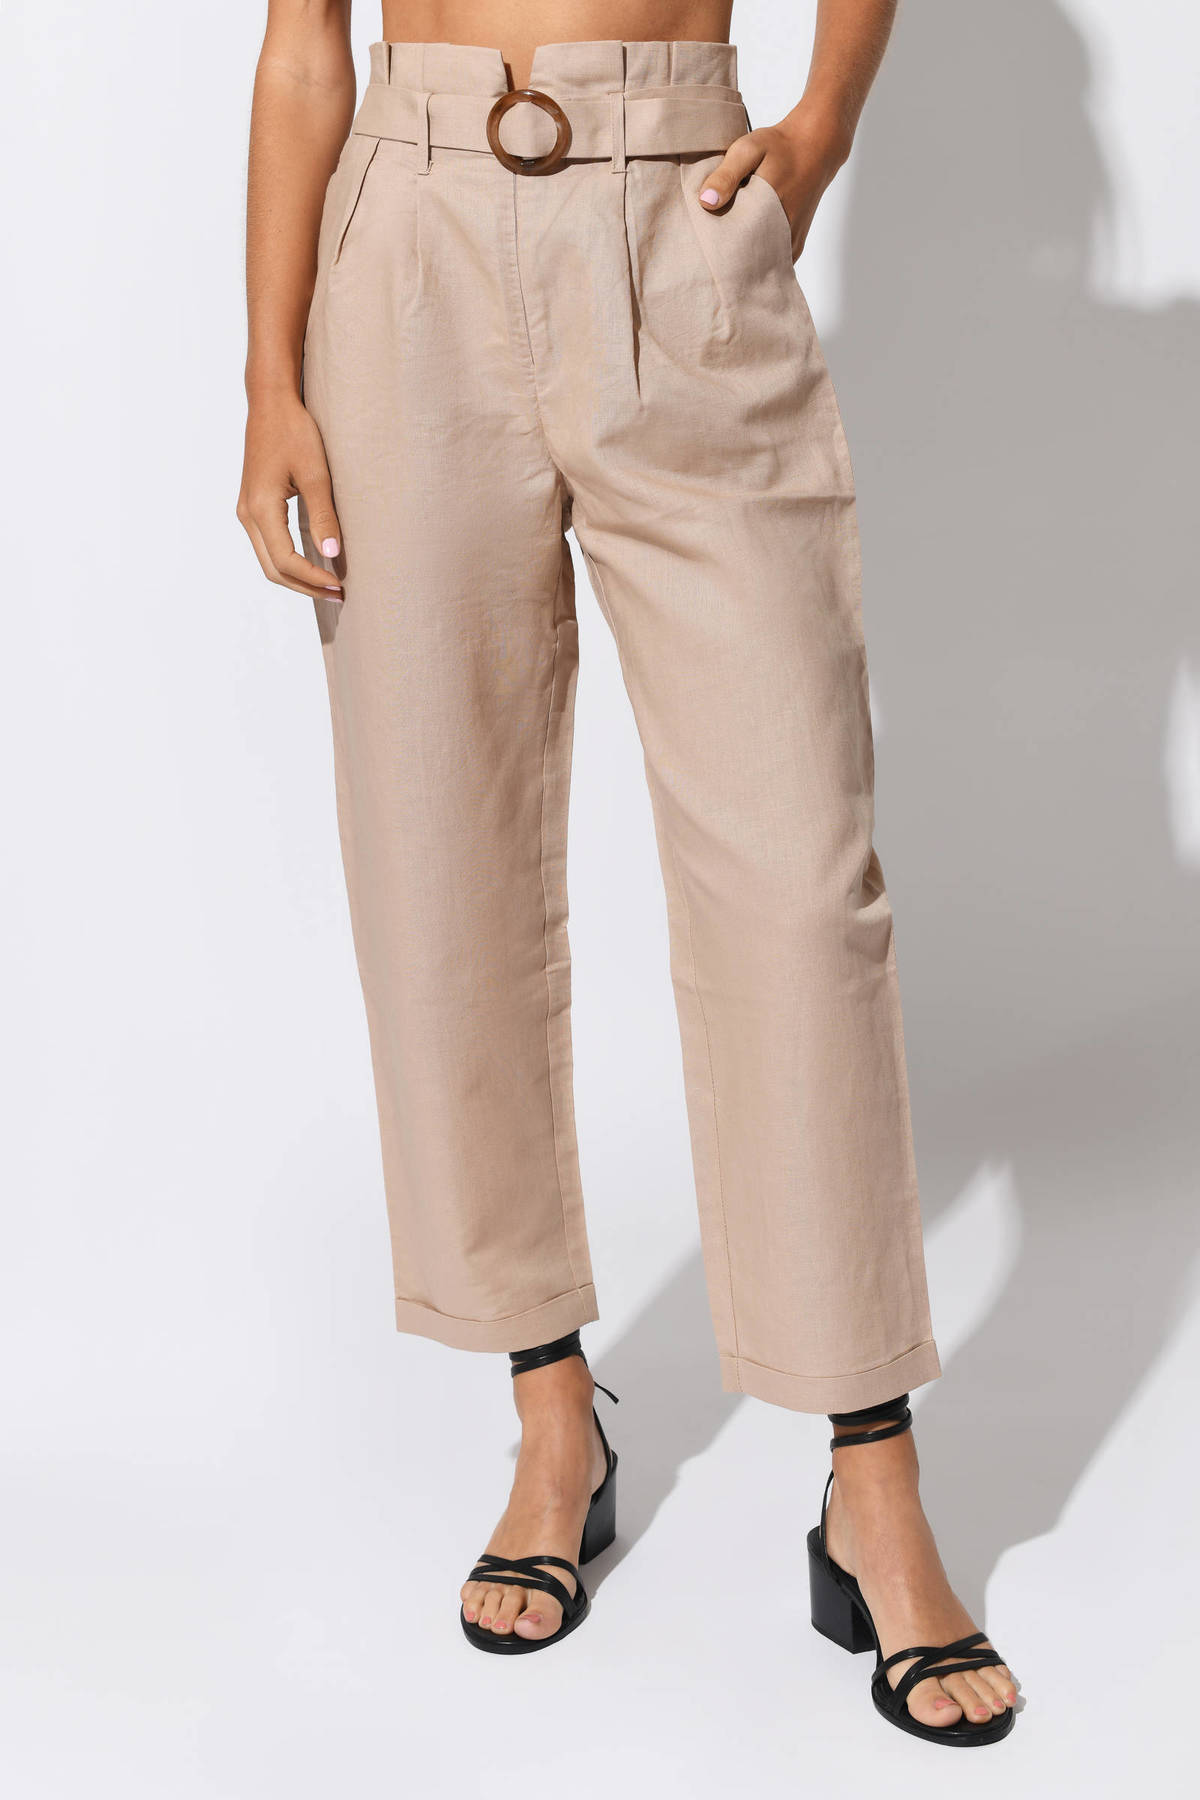 Brown Pants - Paperbag Waist Pants - Sand Waist Pants With Adjustable Belt